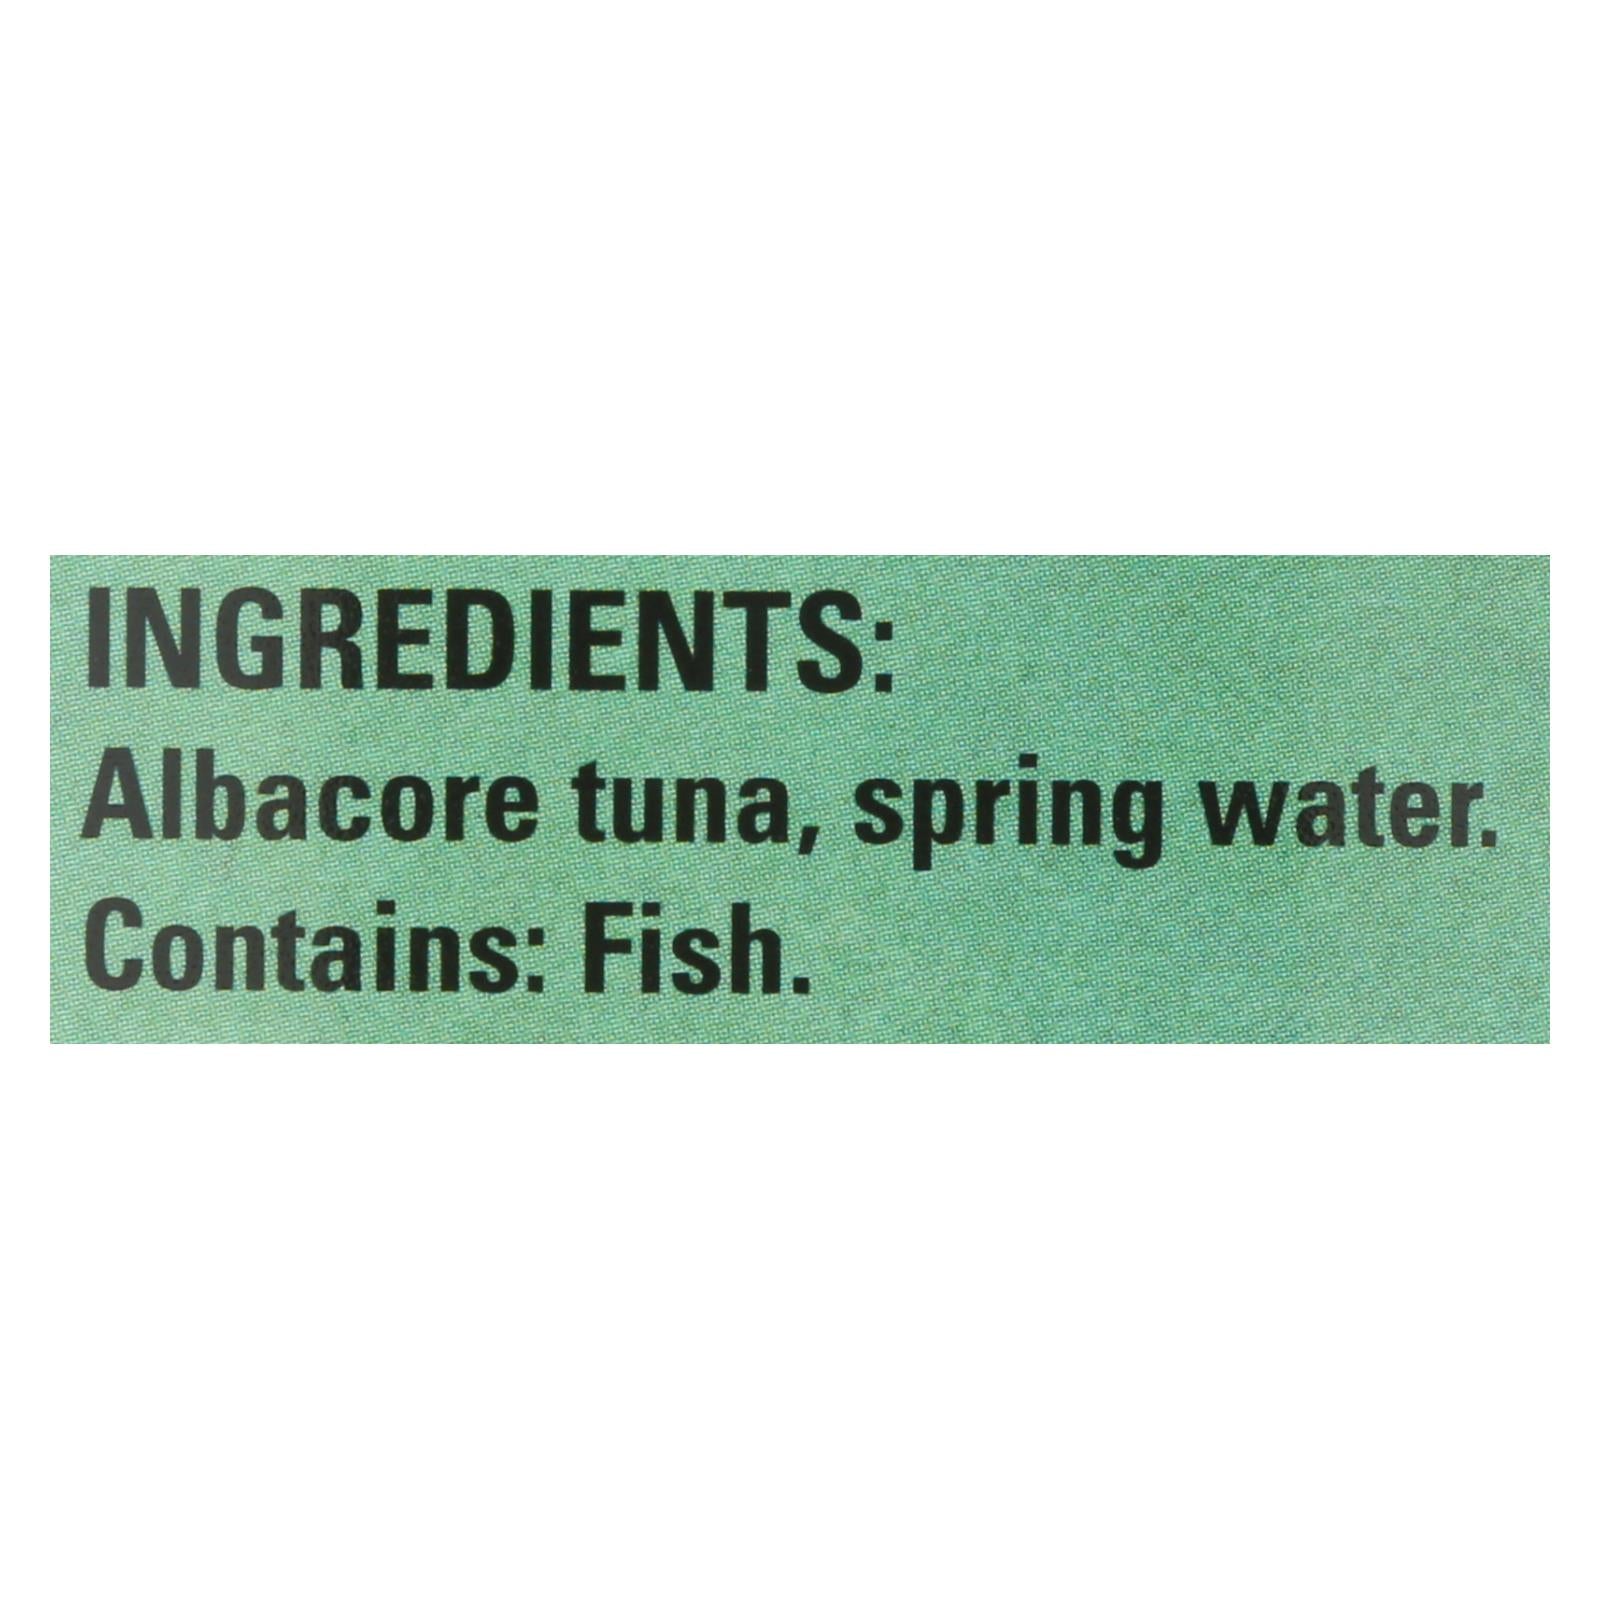 Natural Sea - Wld Albacre Tuna Unsalted - Case Of 6 - 66.3 Oz